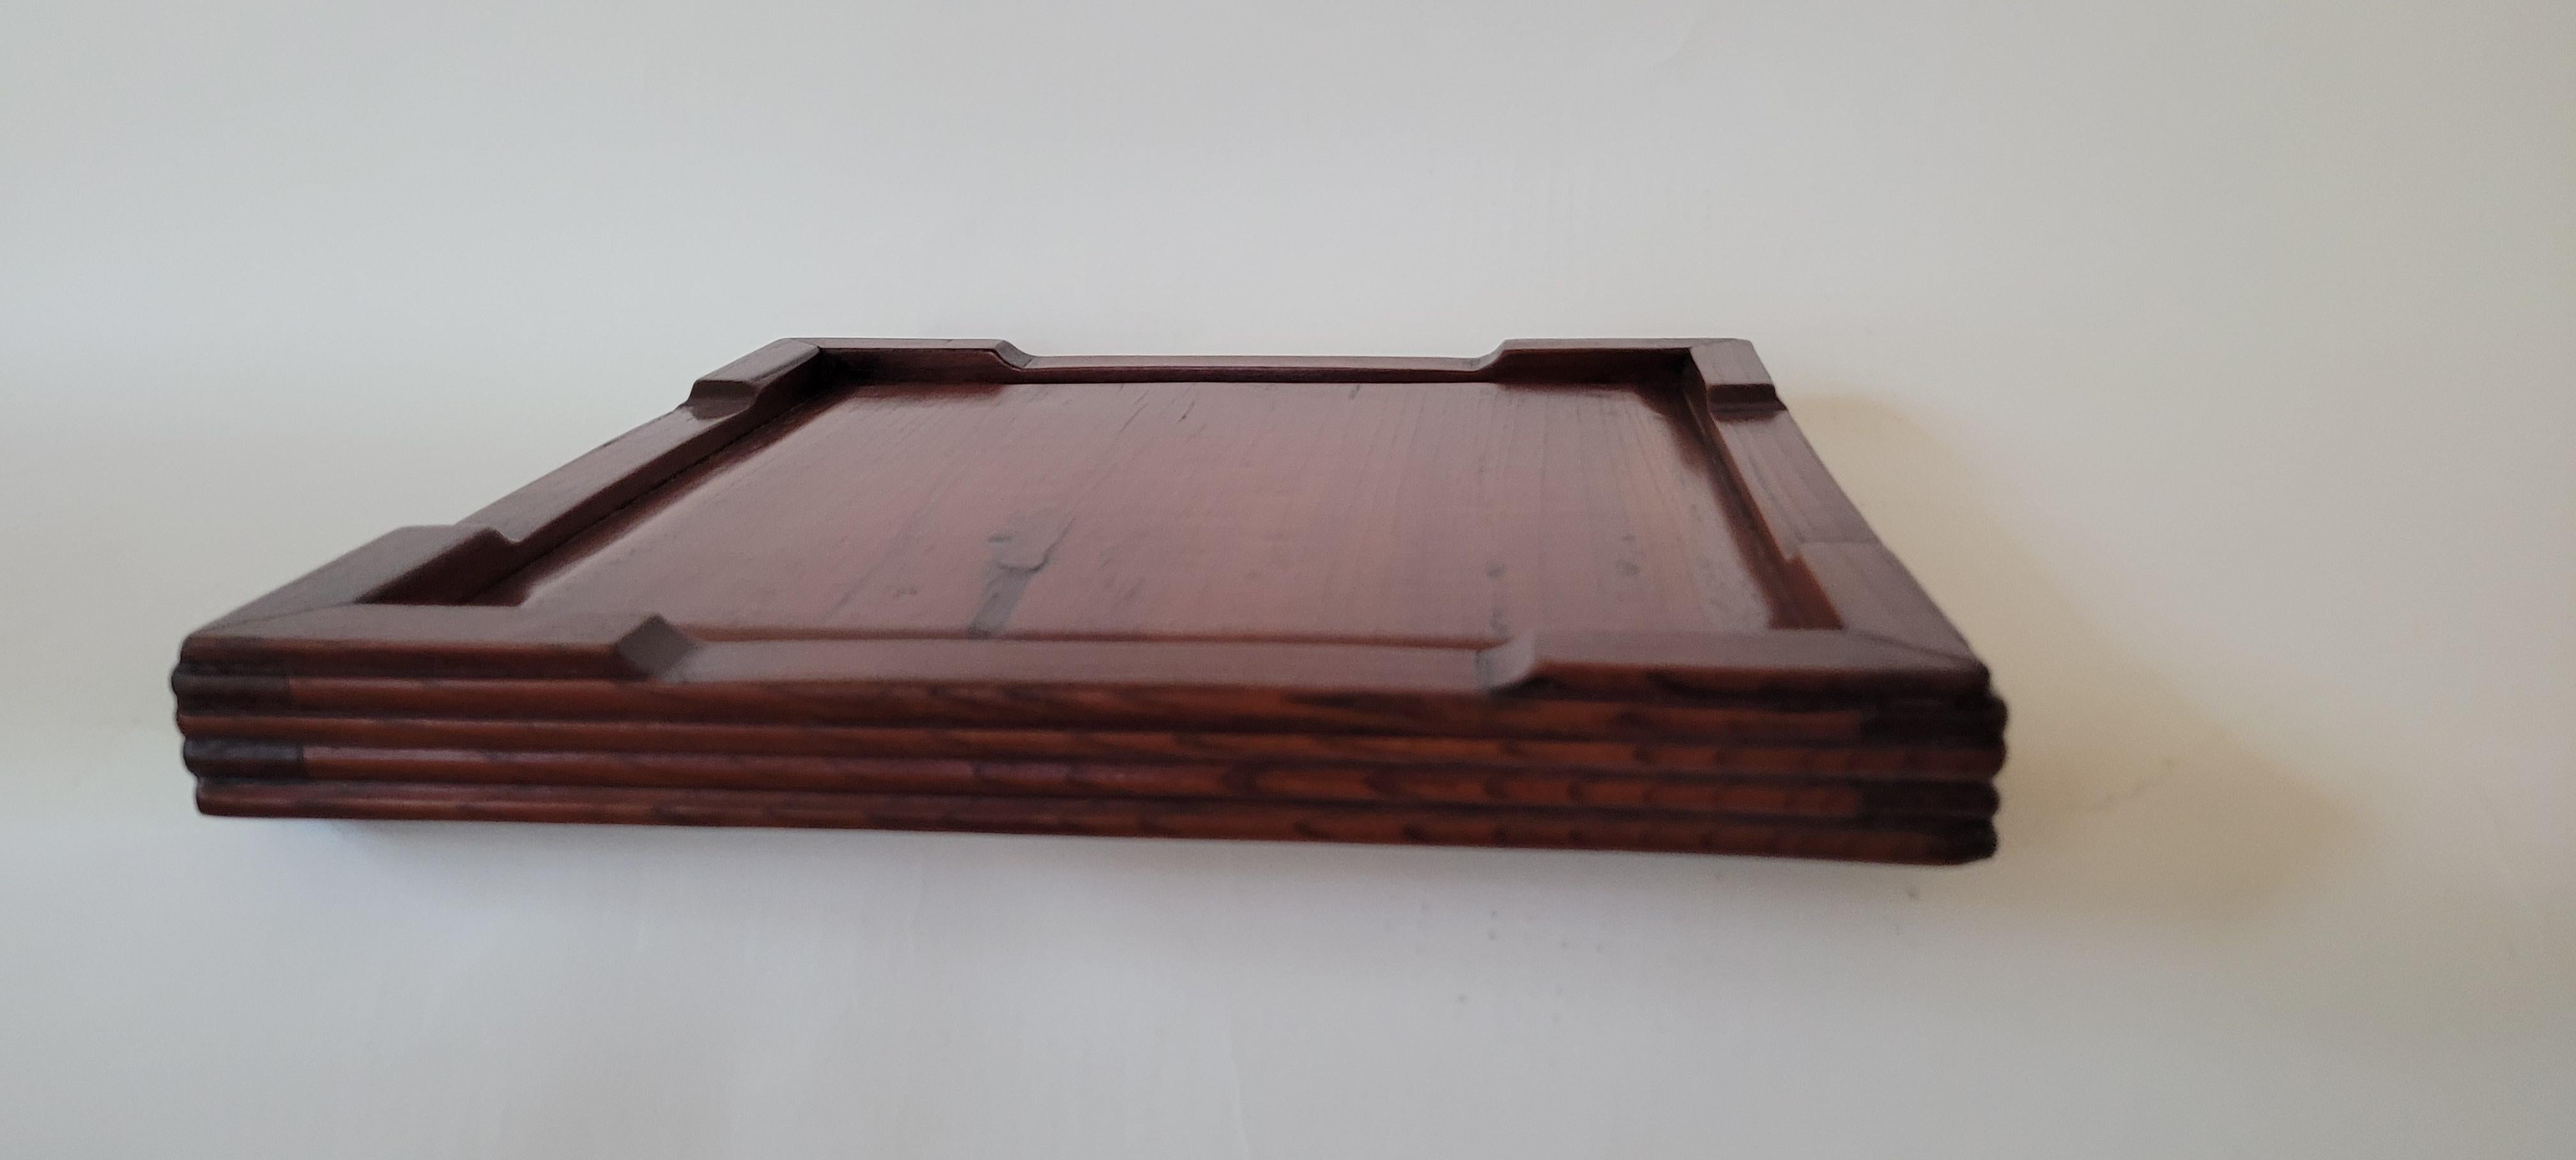 Square Cornered Tea Tray - Late 19th Century  For Sale 1